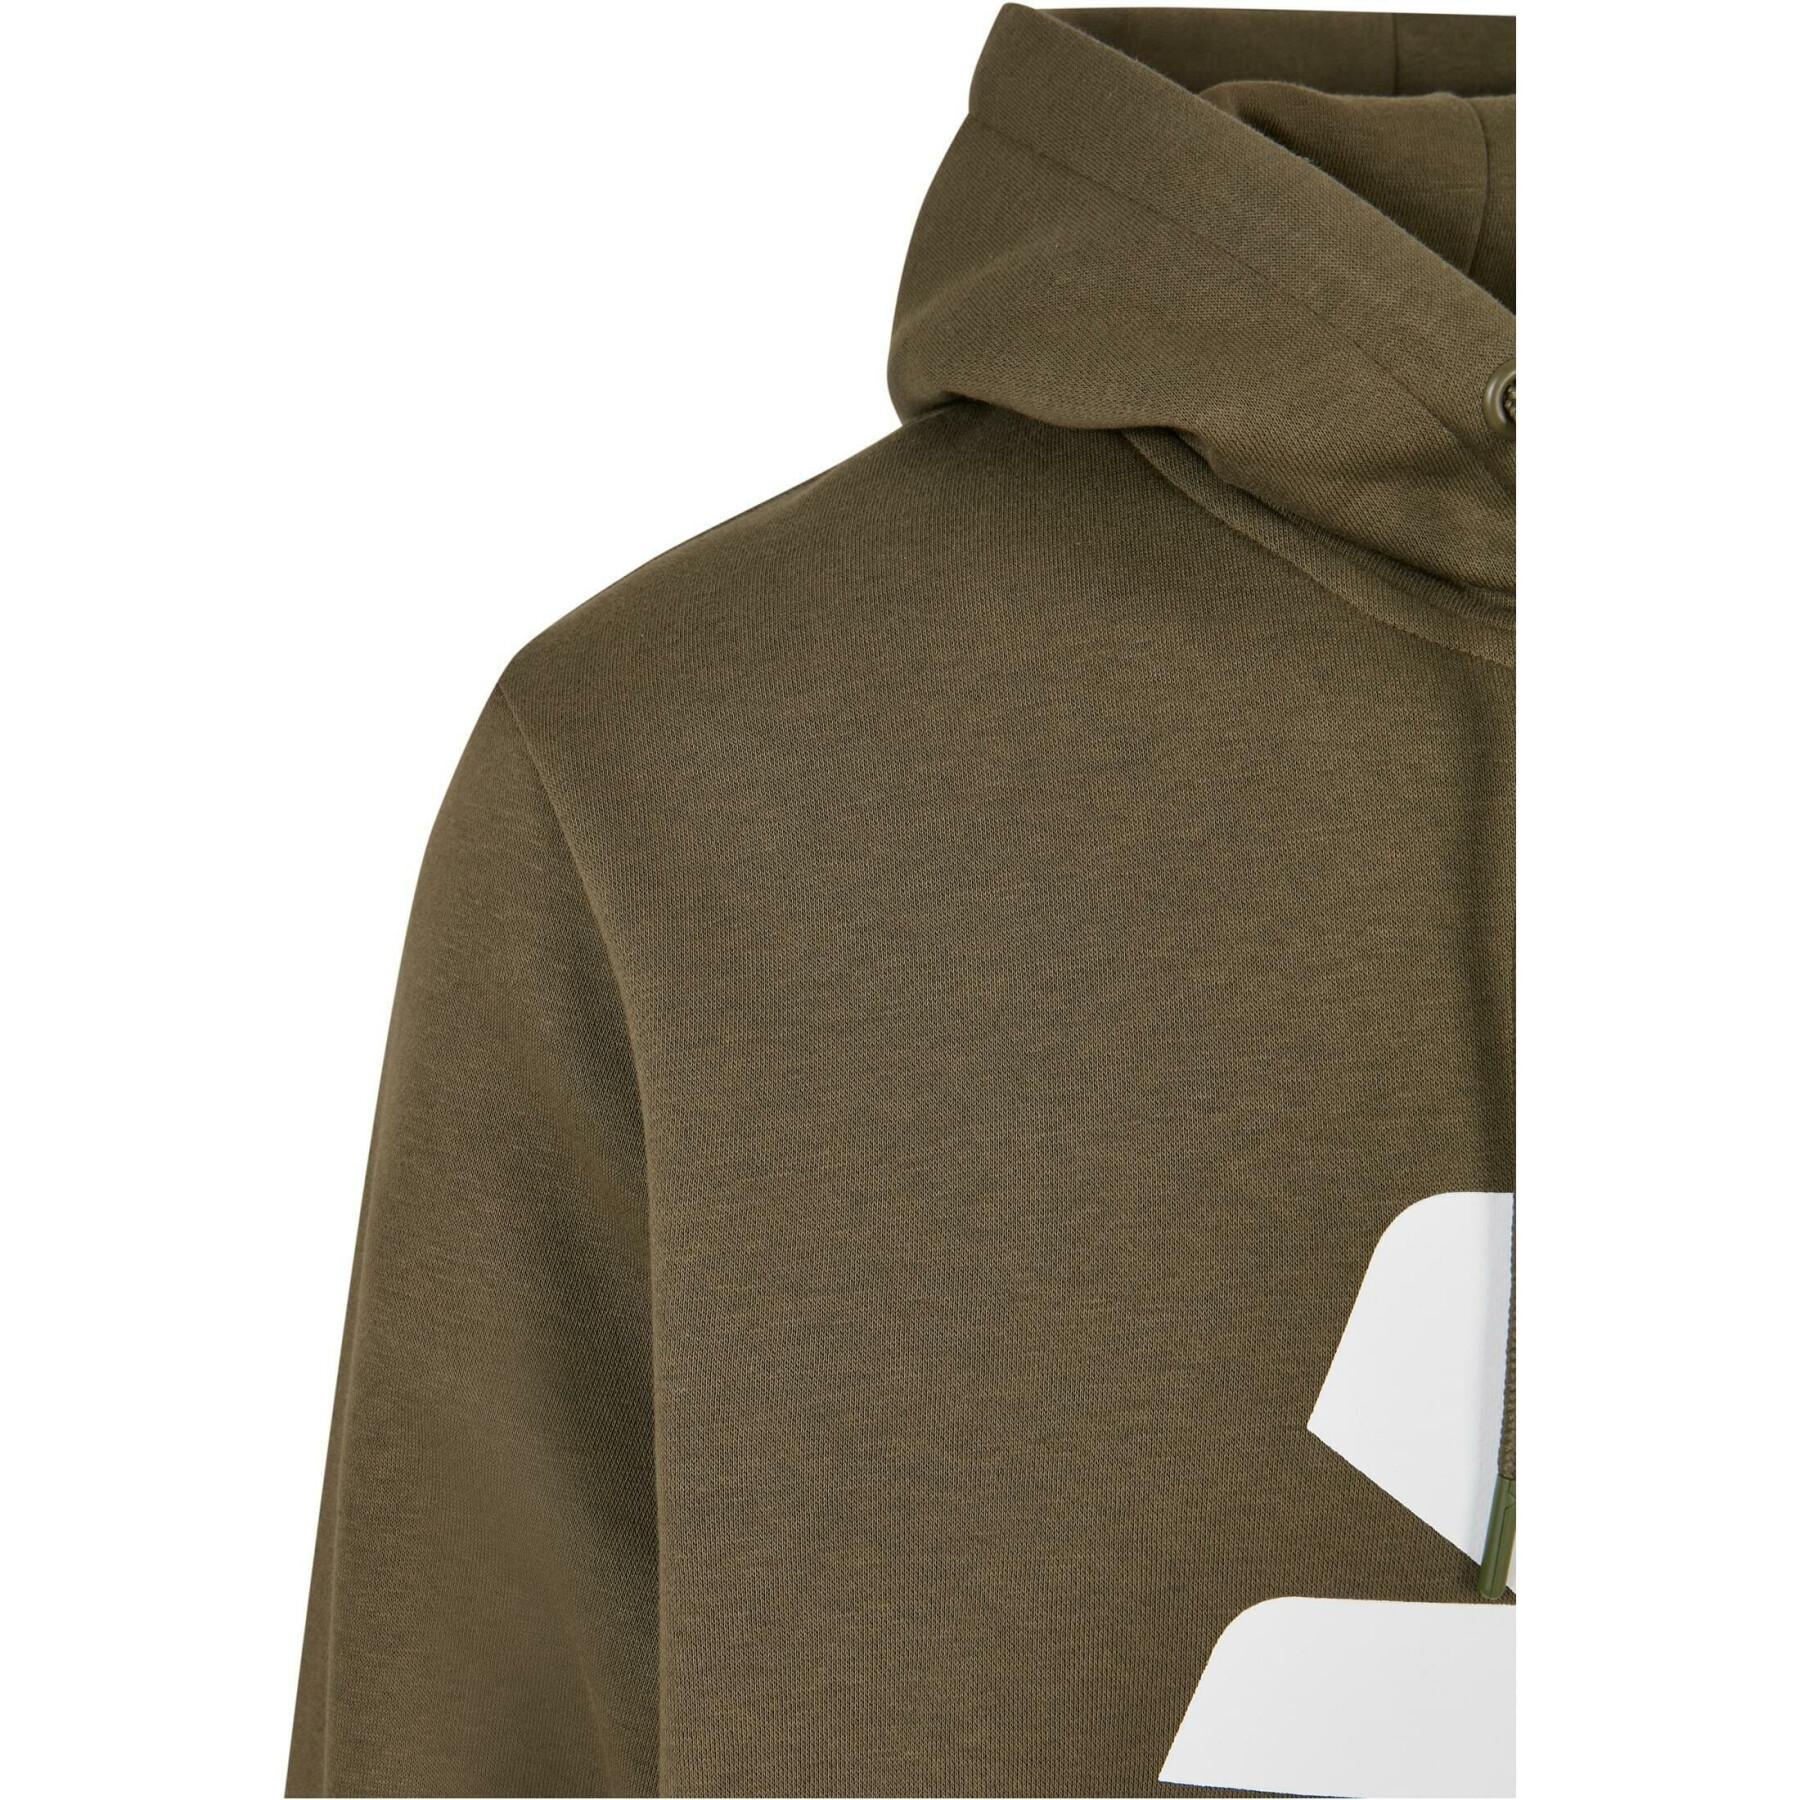 Sweatshirt à capuche avec logo Starter The Classic